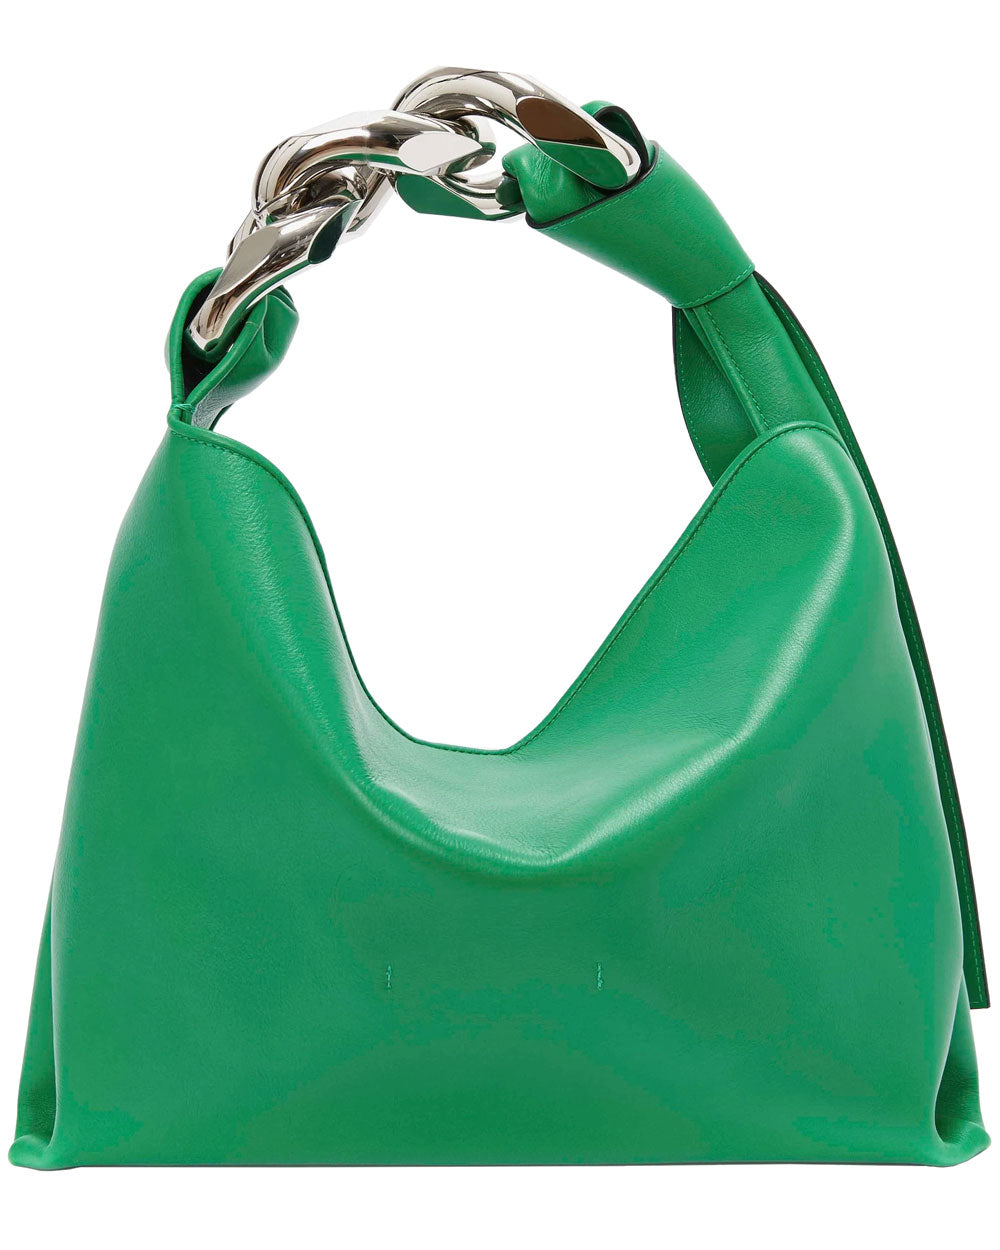 Small Chain Hobo Bag in Bright Green